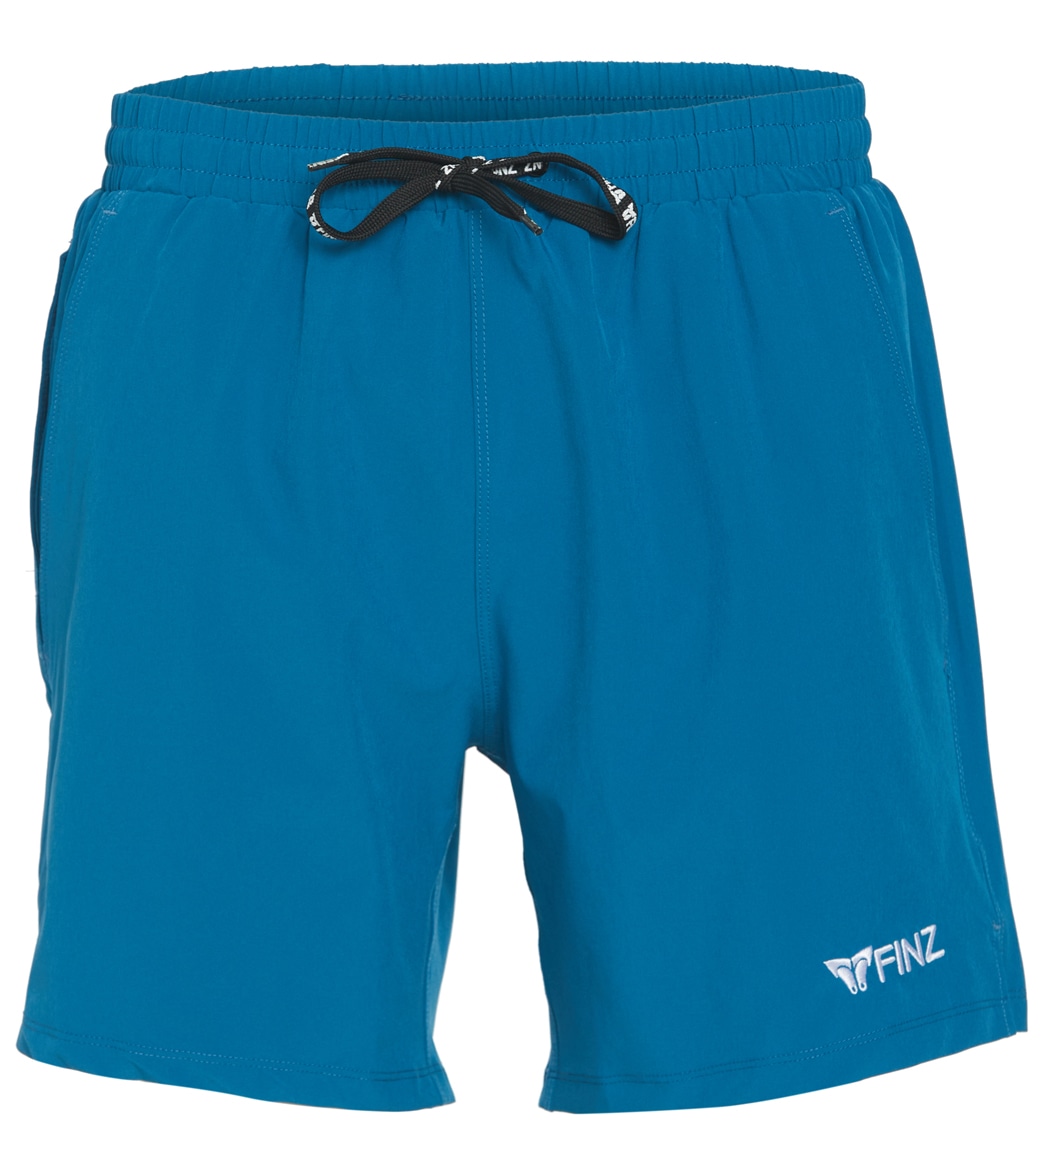 Finz Men's Beach Shorts - Ocean Blue Large - Swimoutlet.com